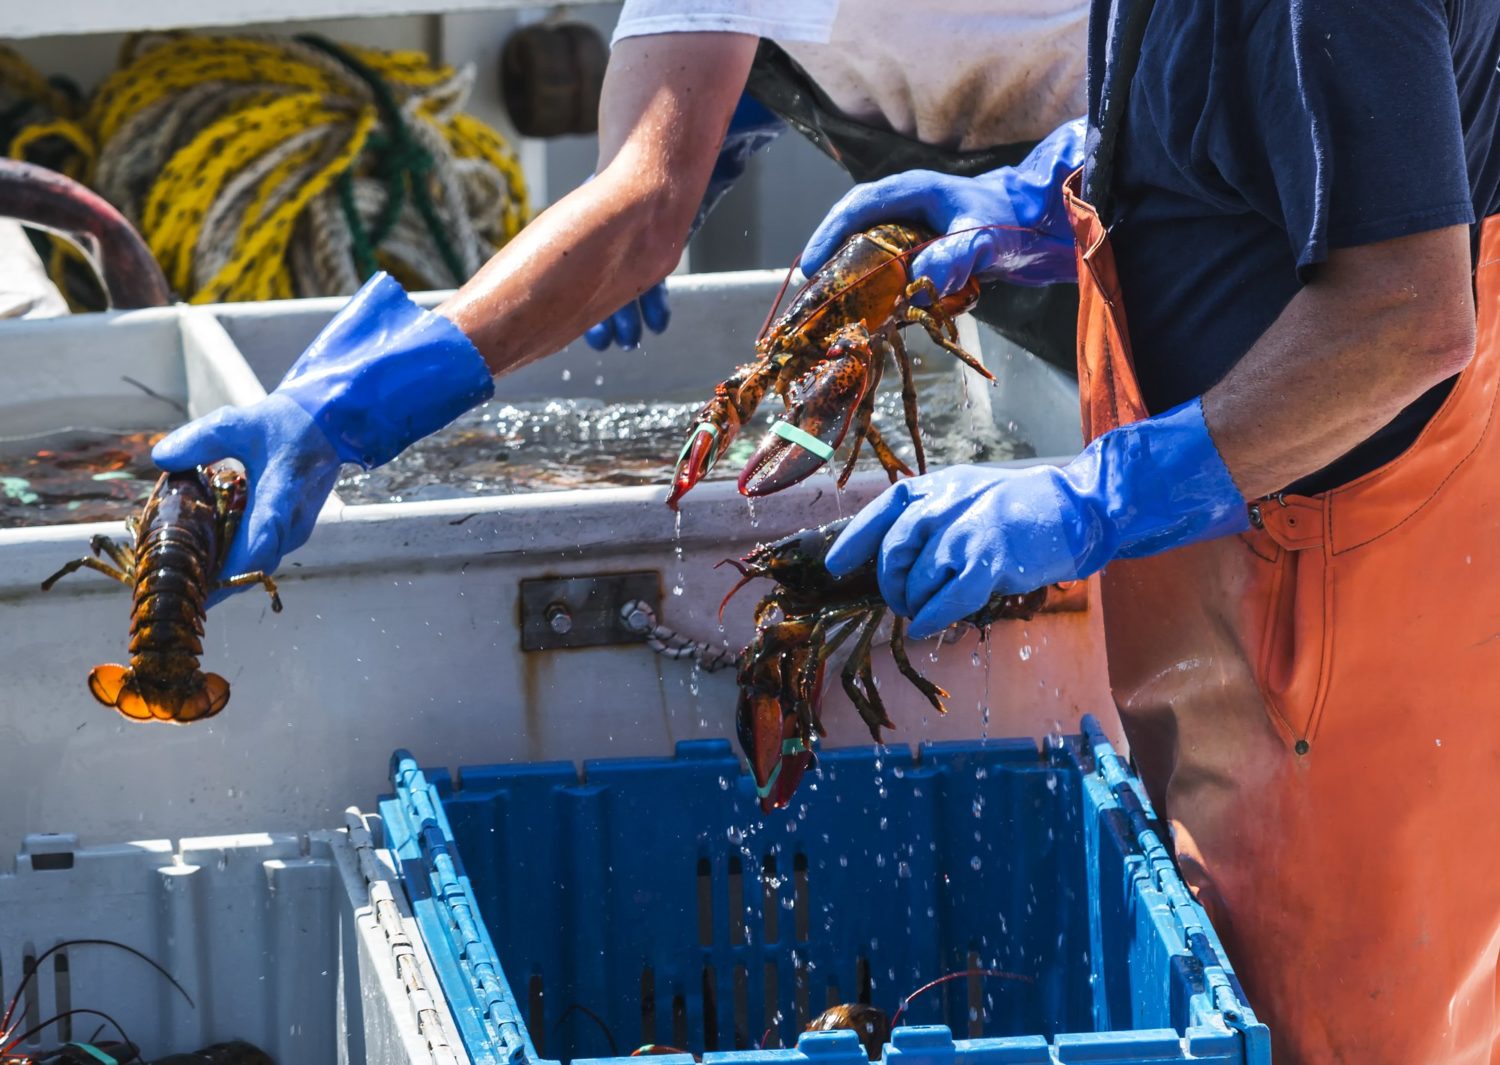 Two lobster fishermen in blue gloves sort freshly caught lobster into bins.